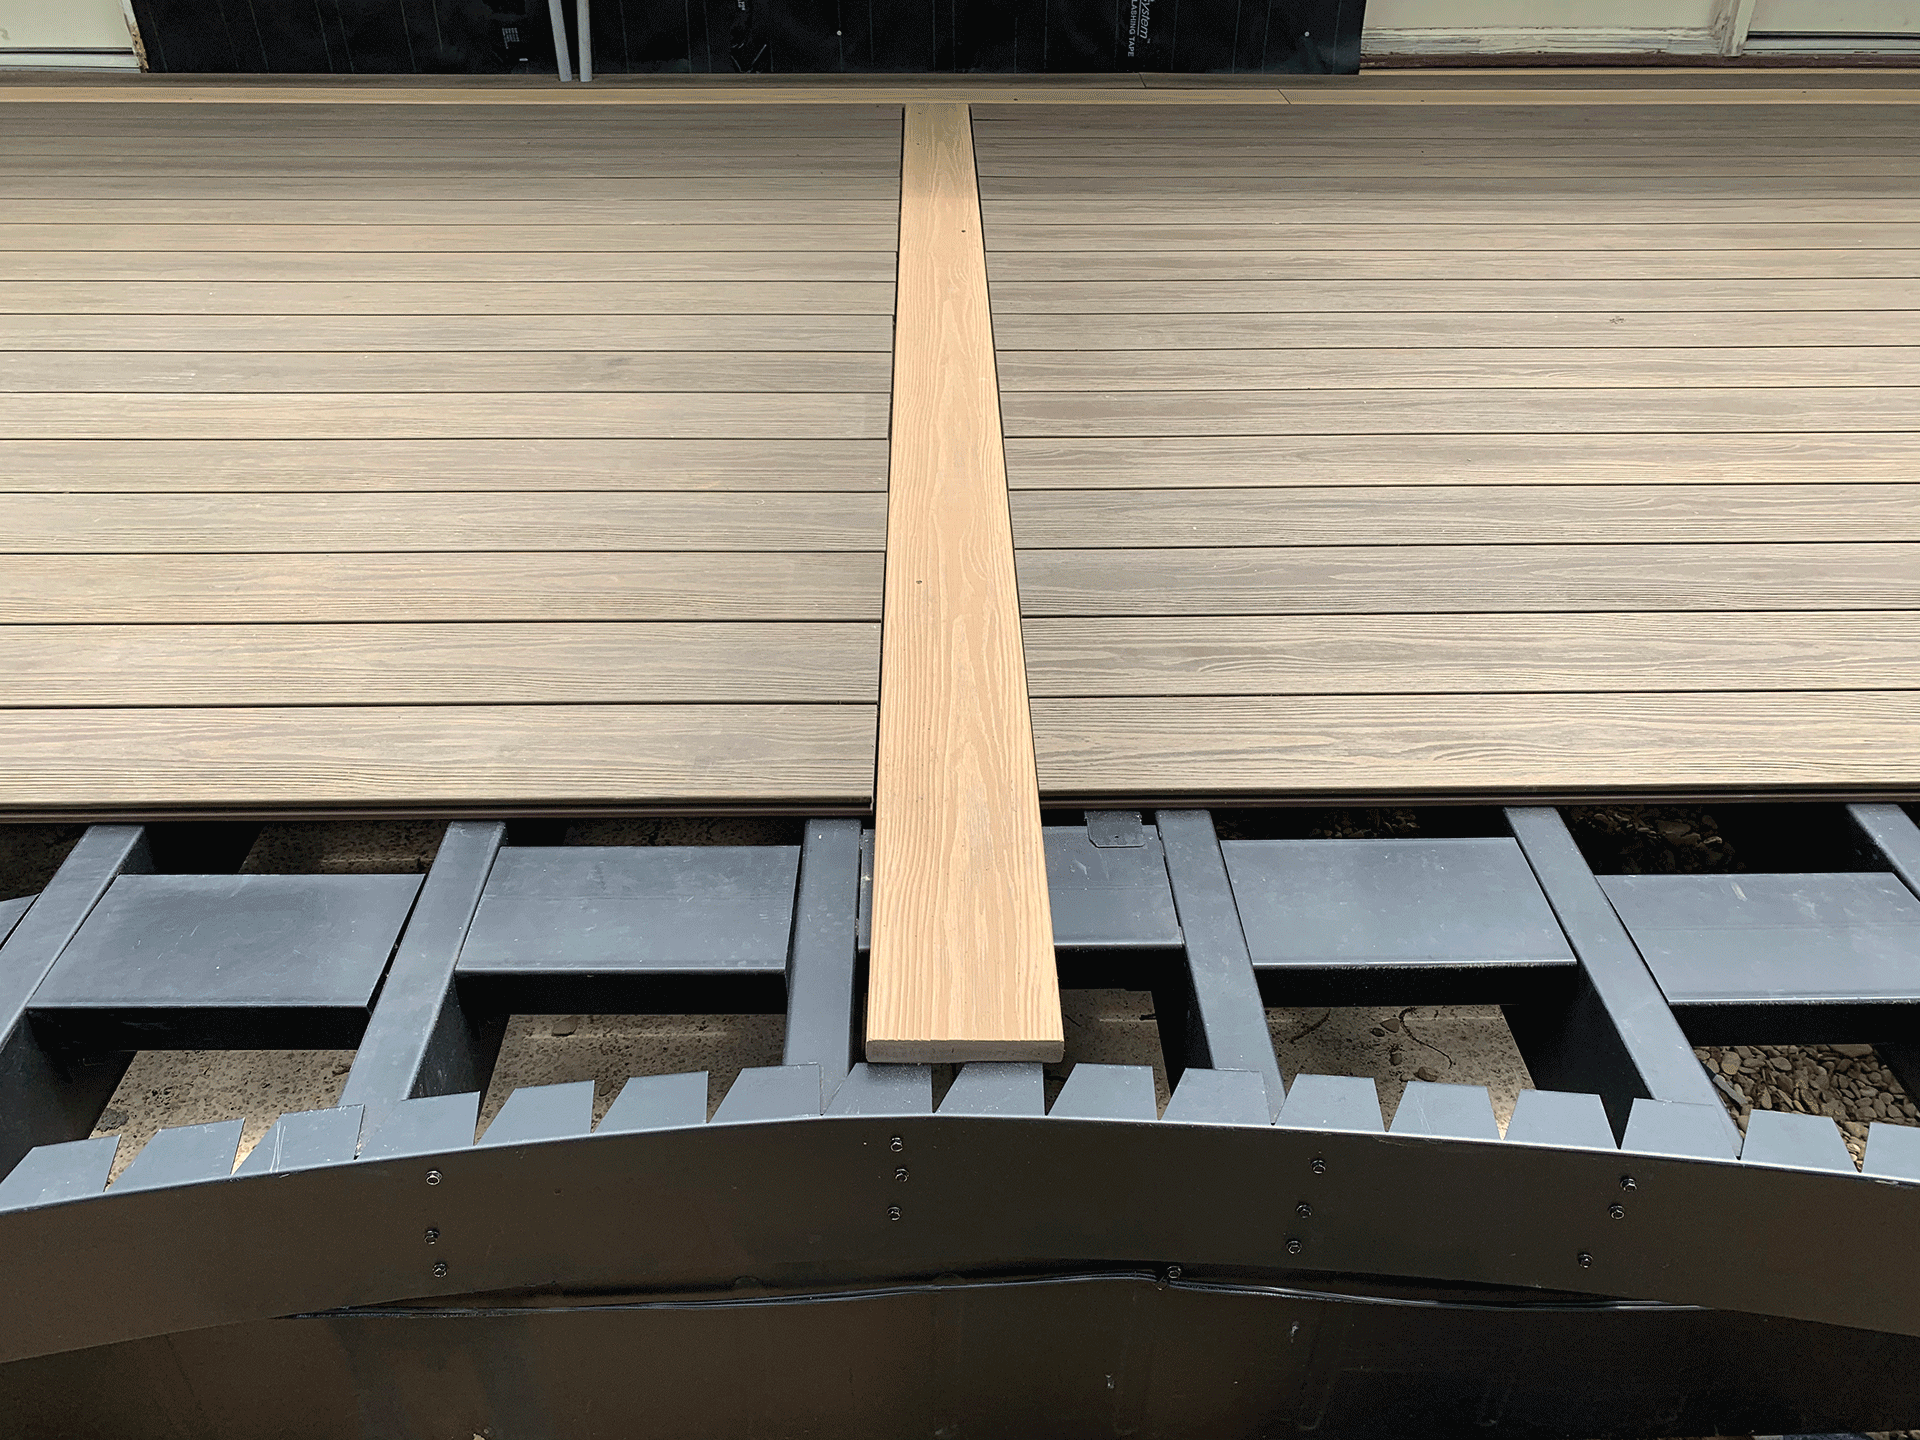 Composite deck boards in progress of being built on steel deck framing. 